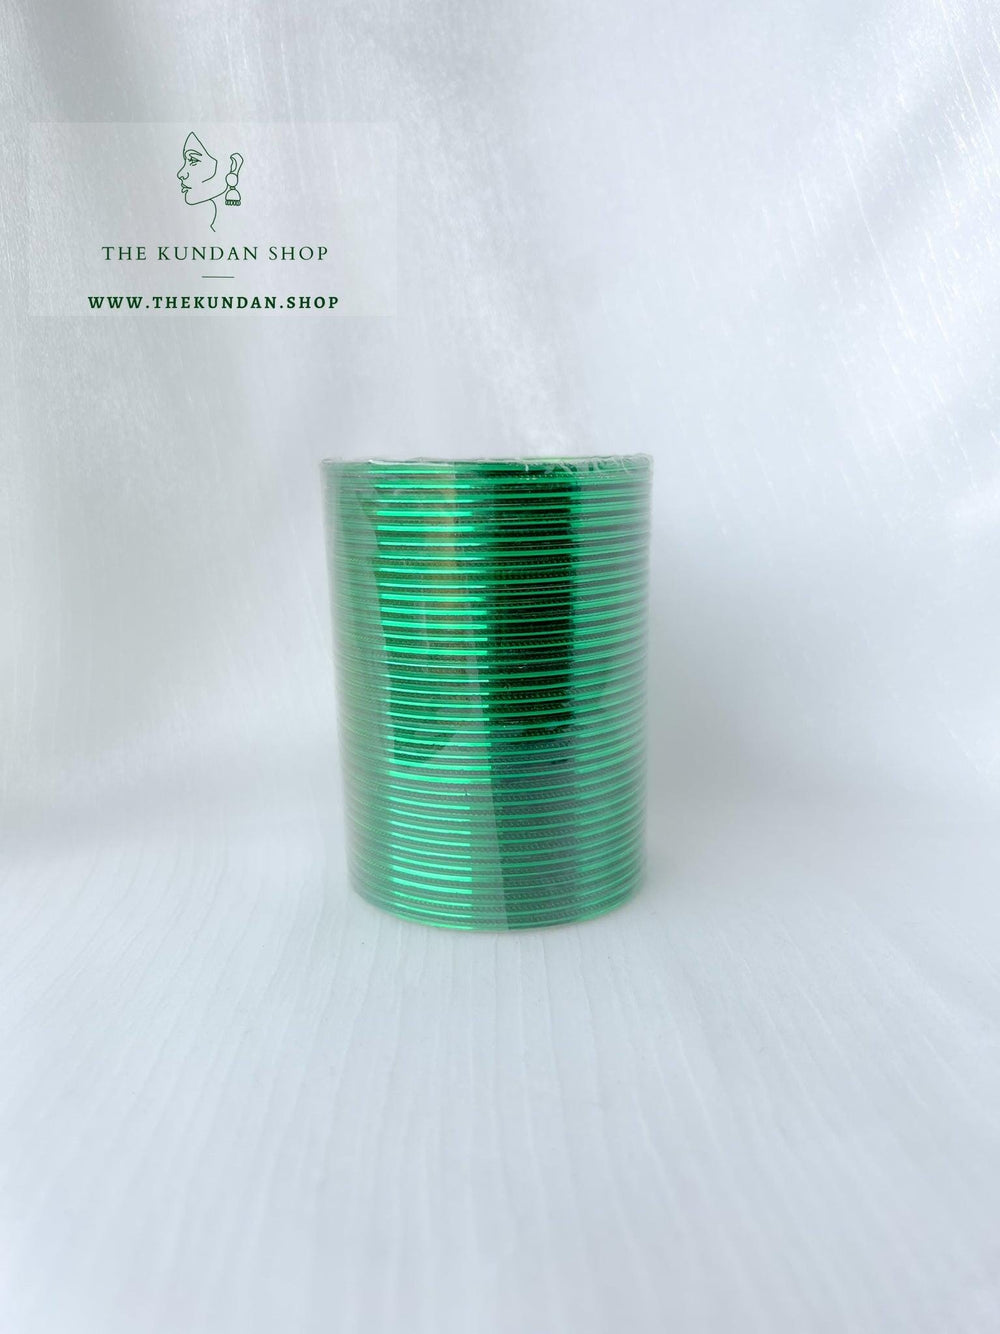 Metallic Bangle Stack - Traditional Green Bangles THE KUNDAN SHOP 